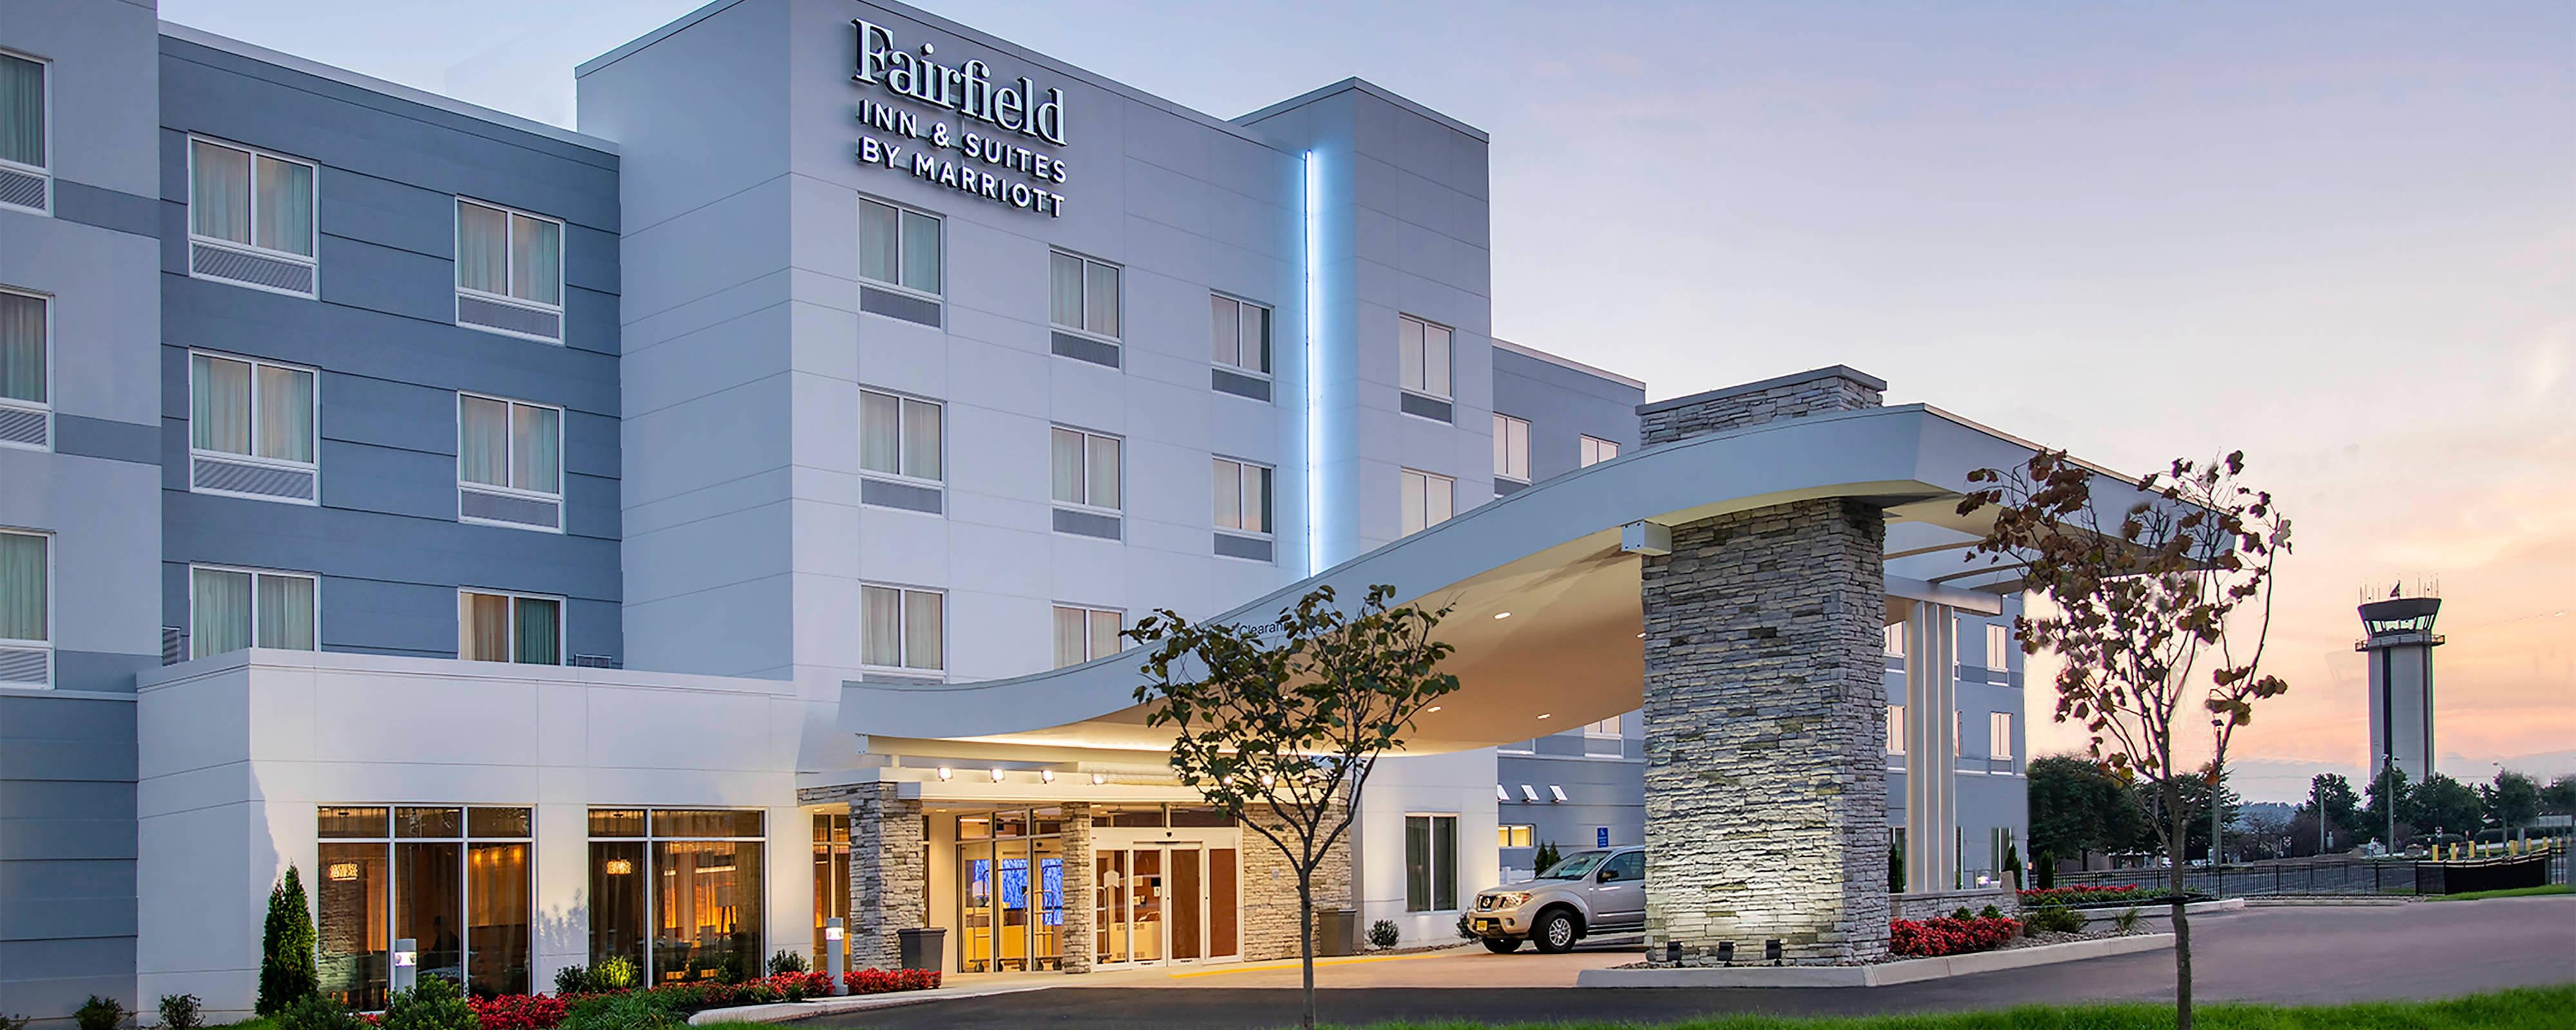 Fairfield Inn Suites Harrisburg International Airport Sammeln